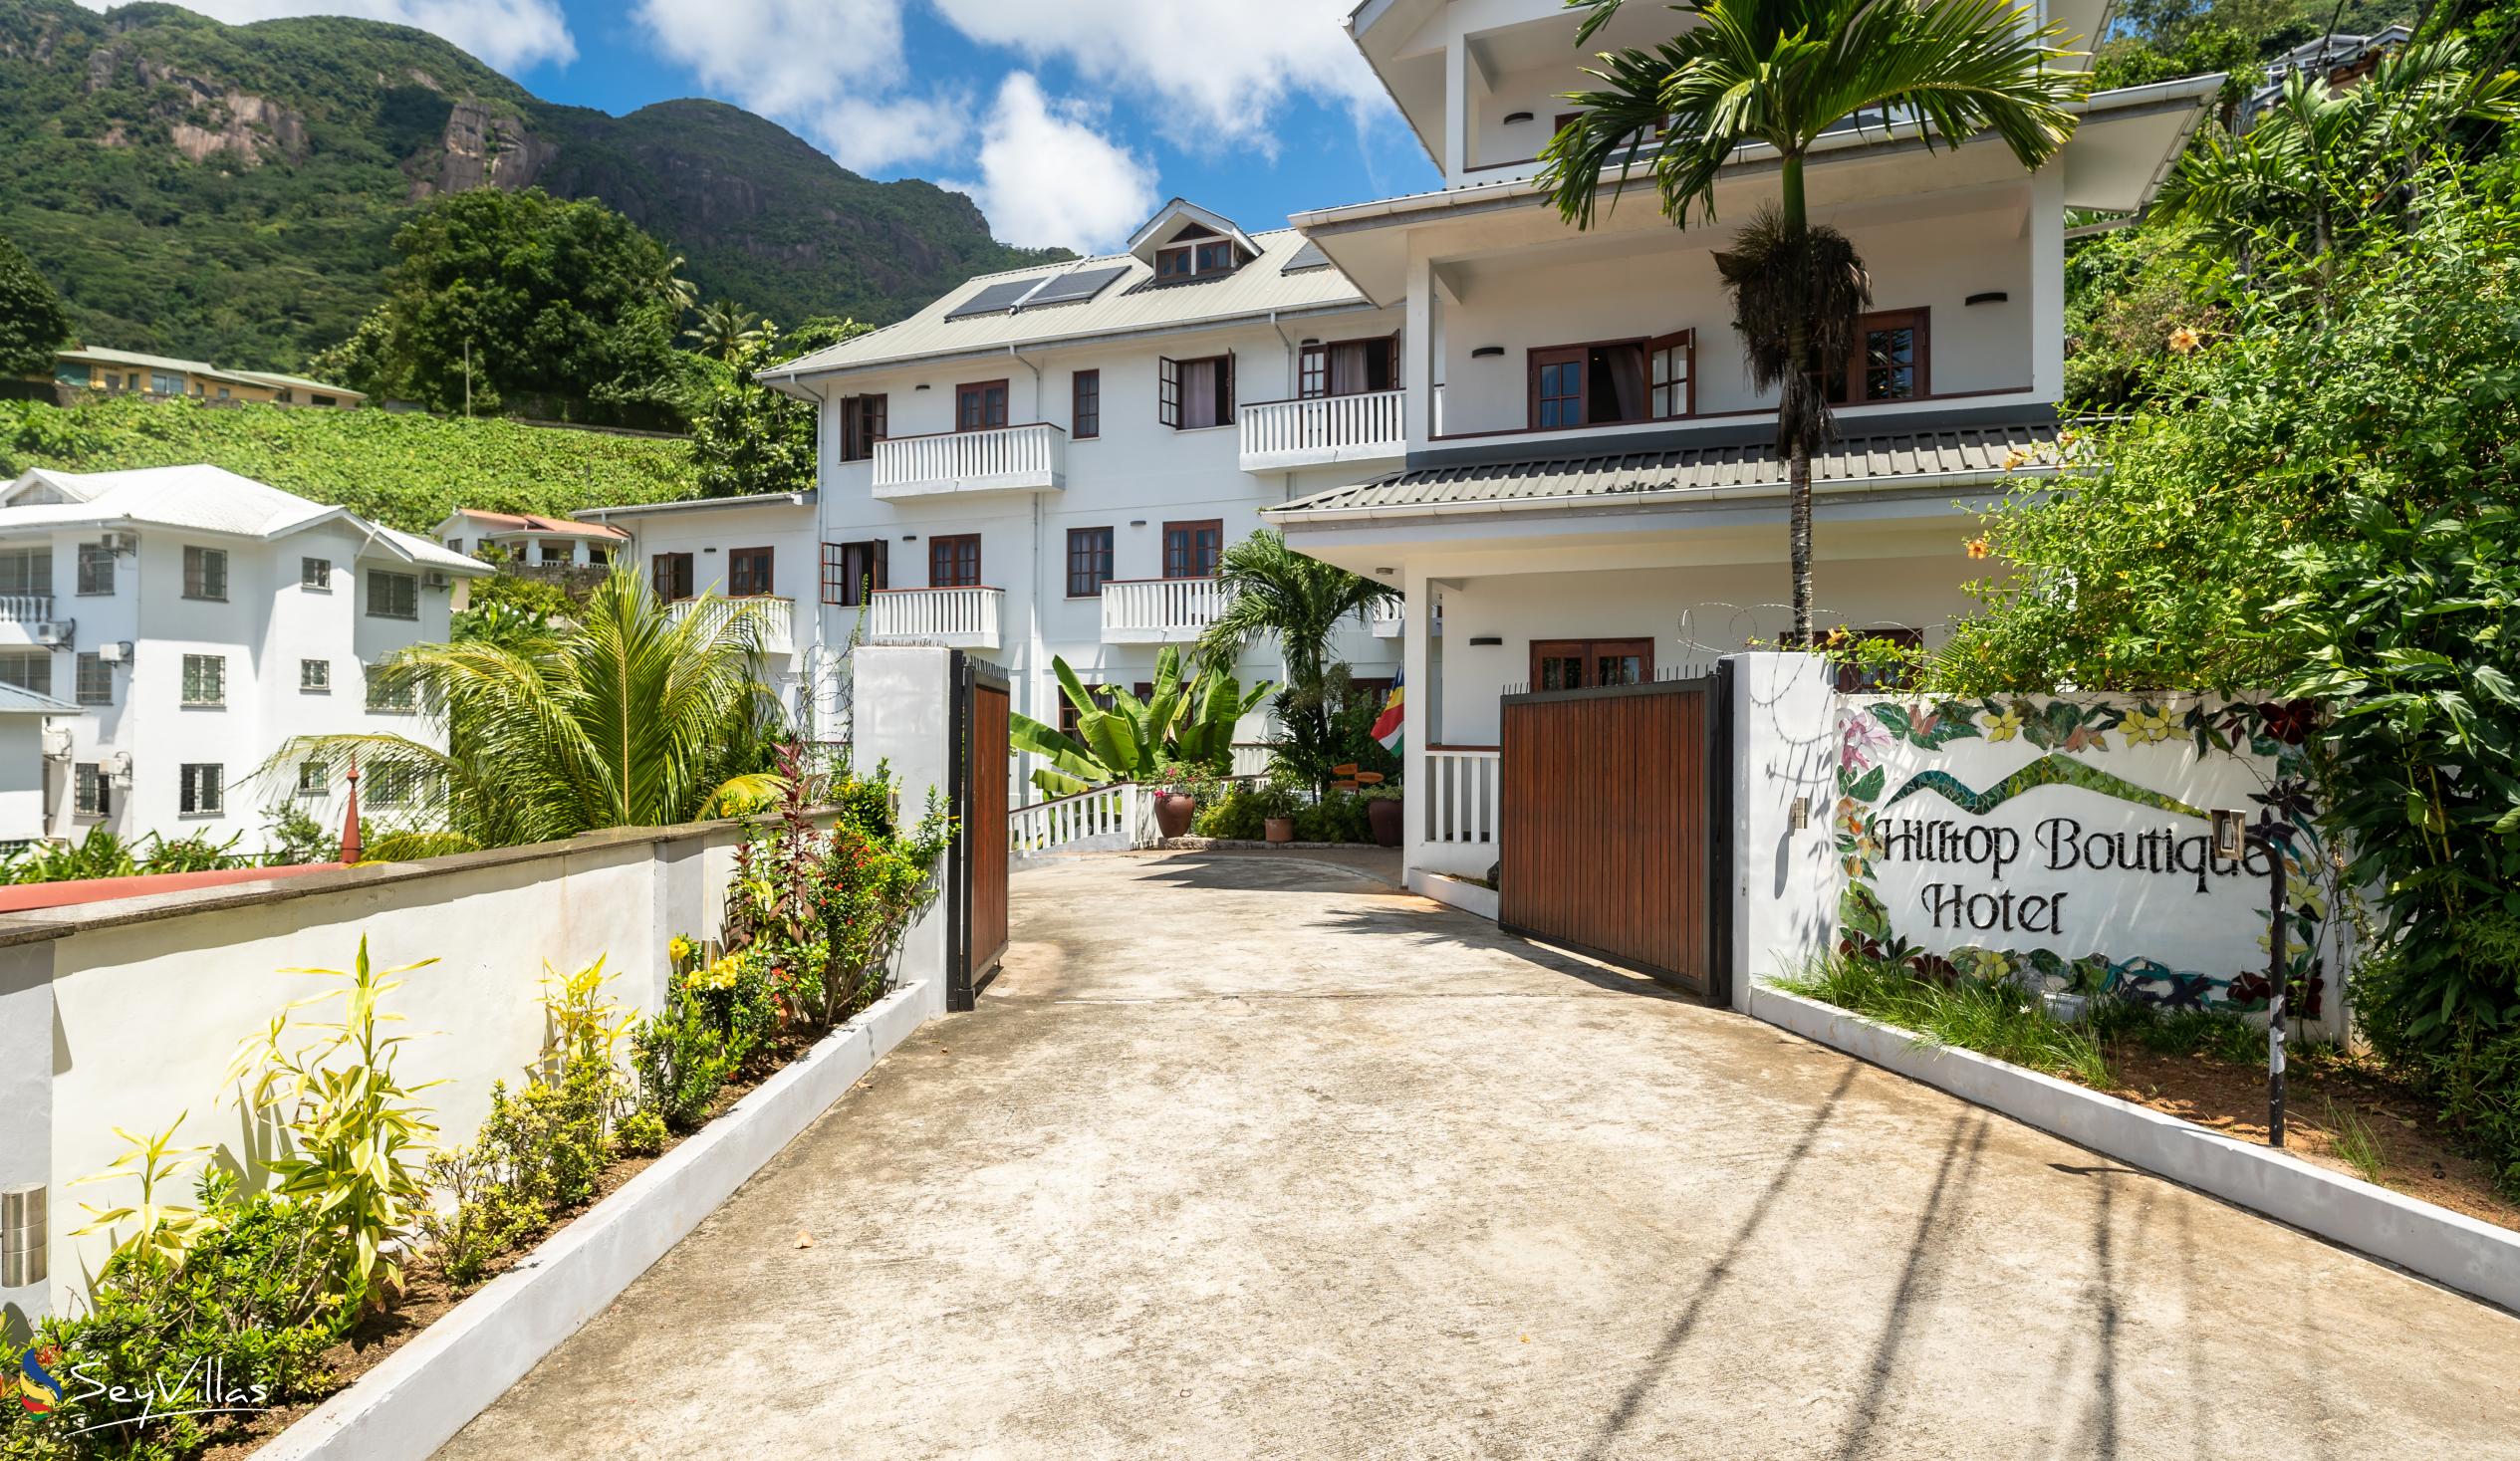 Photo 6: Hilltop Boutique Hotel - Outdoor area - Mahé (Seychelles)